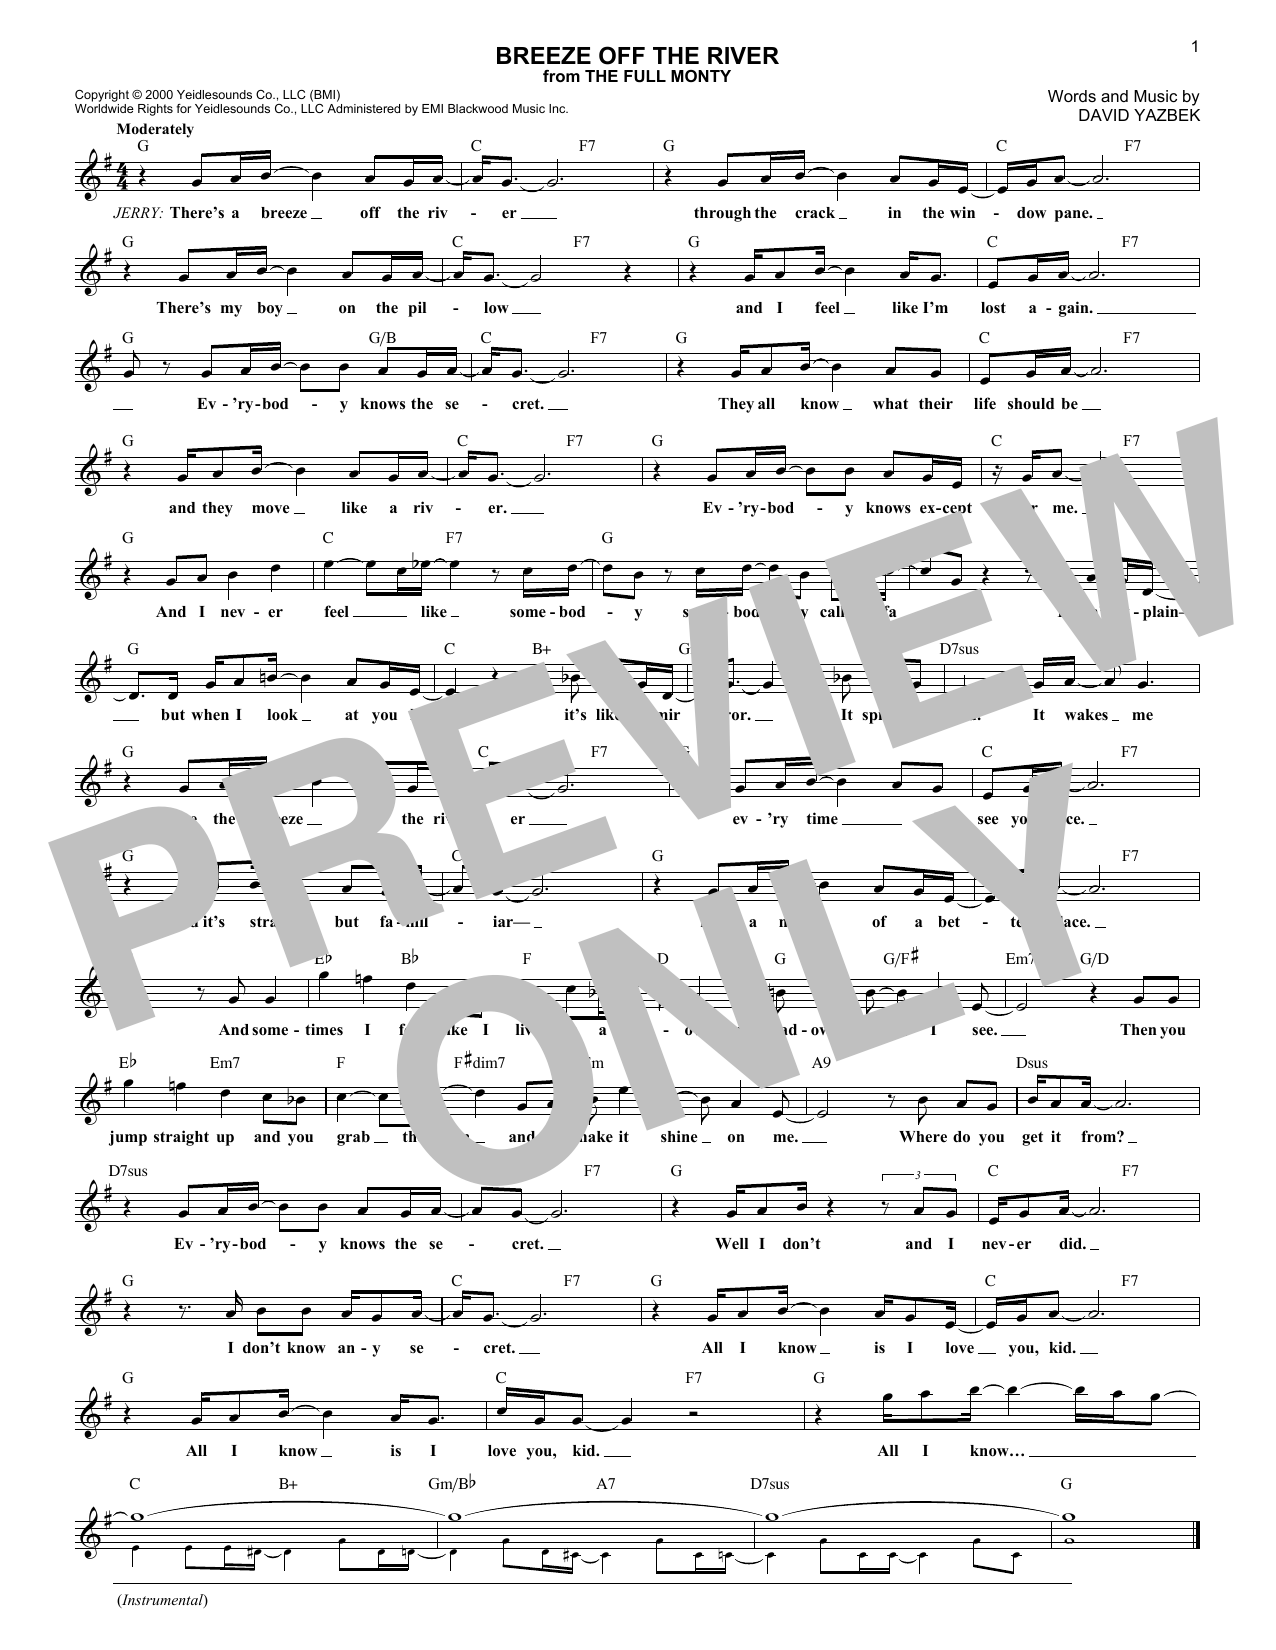 David Yazbek Breeze Off The River Sheet Music Notes & Chords for Melody Line, Lyrics & Chords - Download or Print PDF